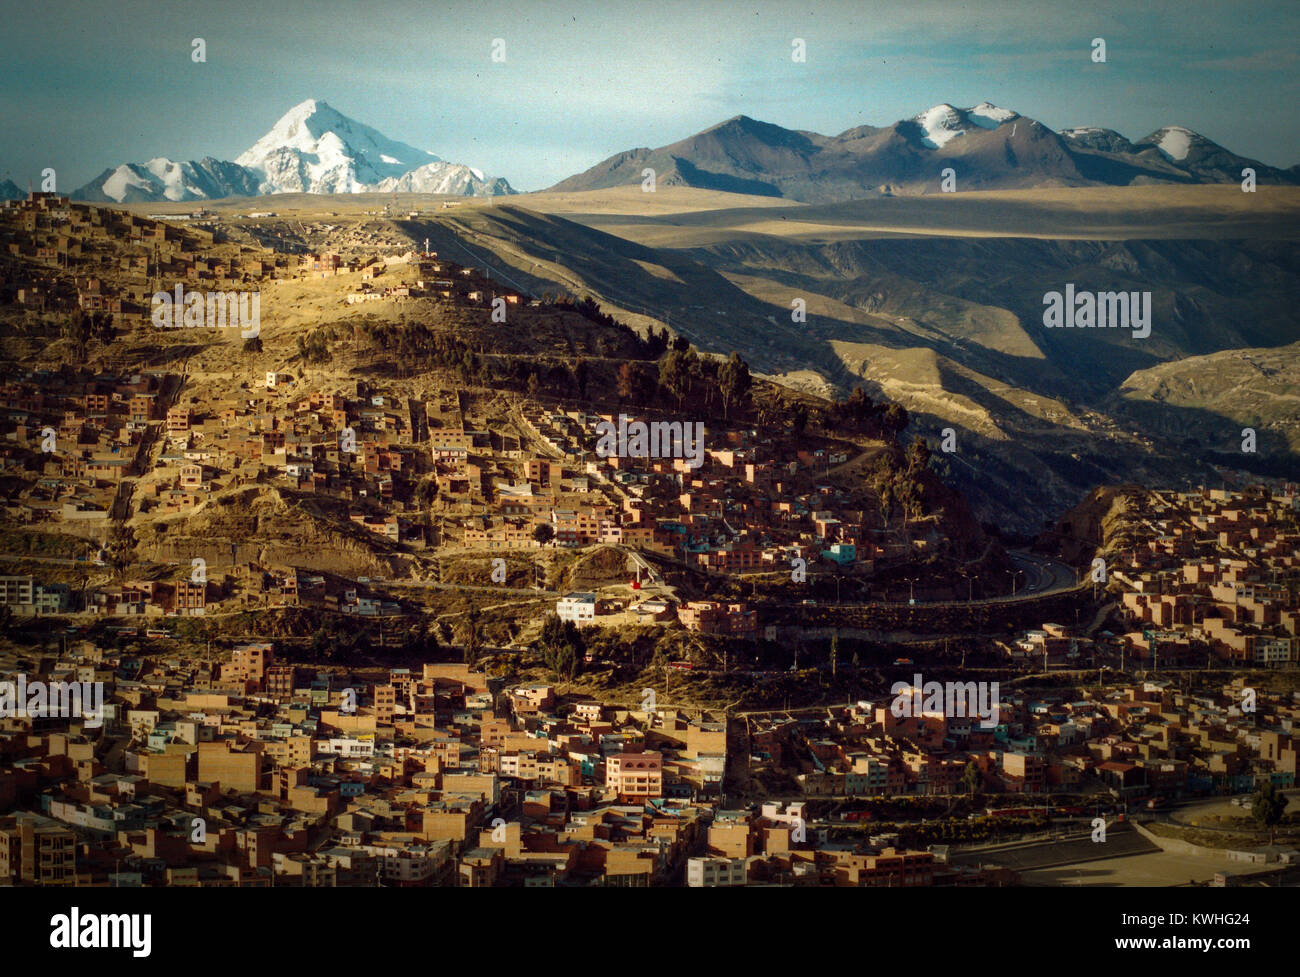 Houses in a town with a mountain range in the background, Macrodistrito Maximiliano Paredes, La Paz, Bolivia Stock Photo